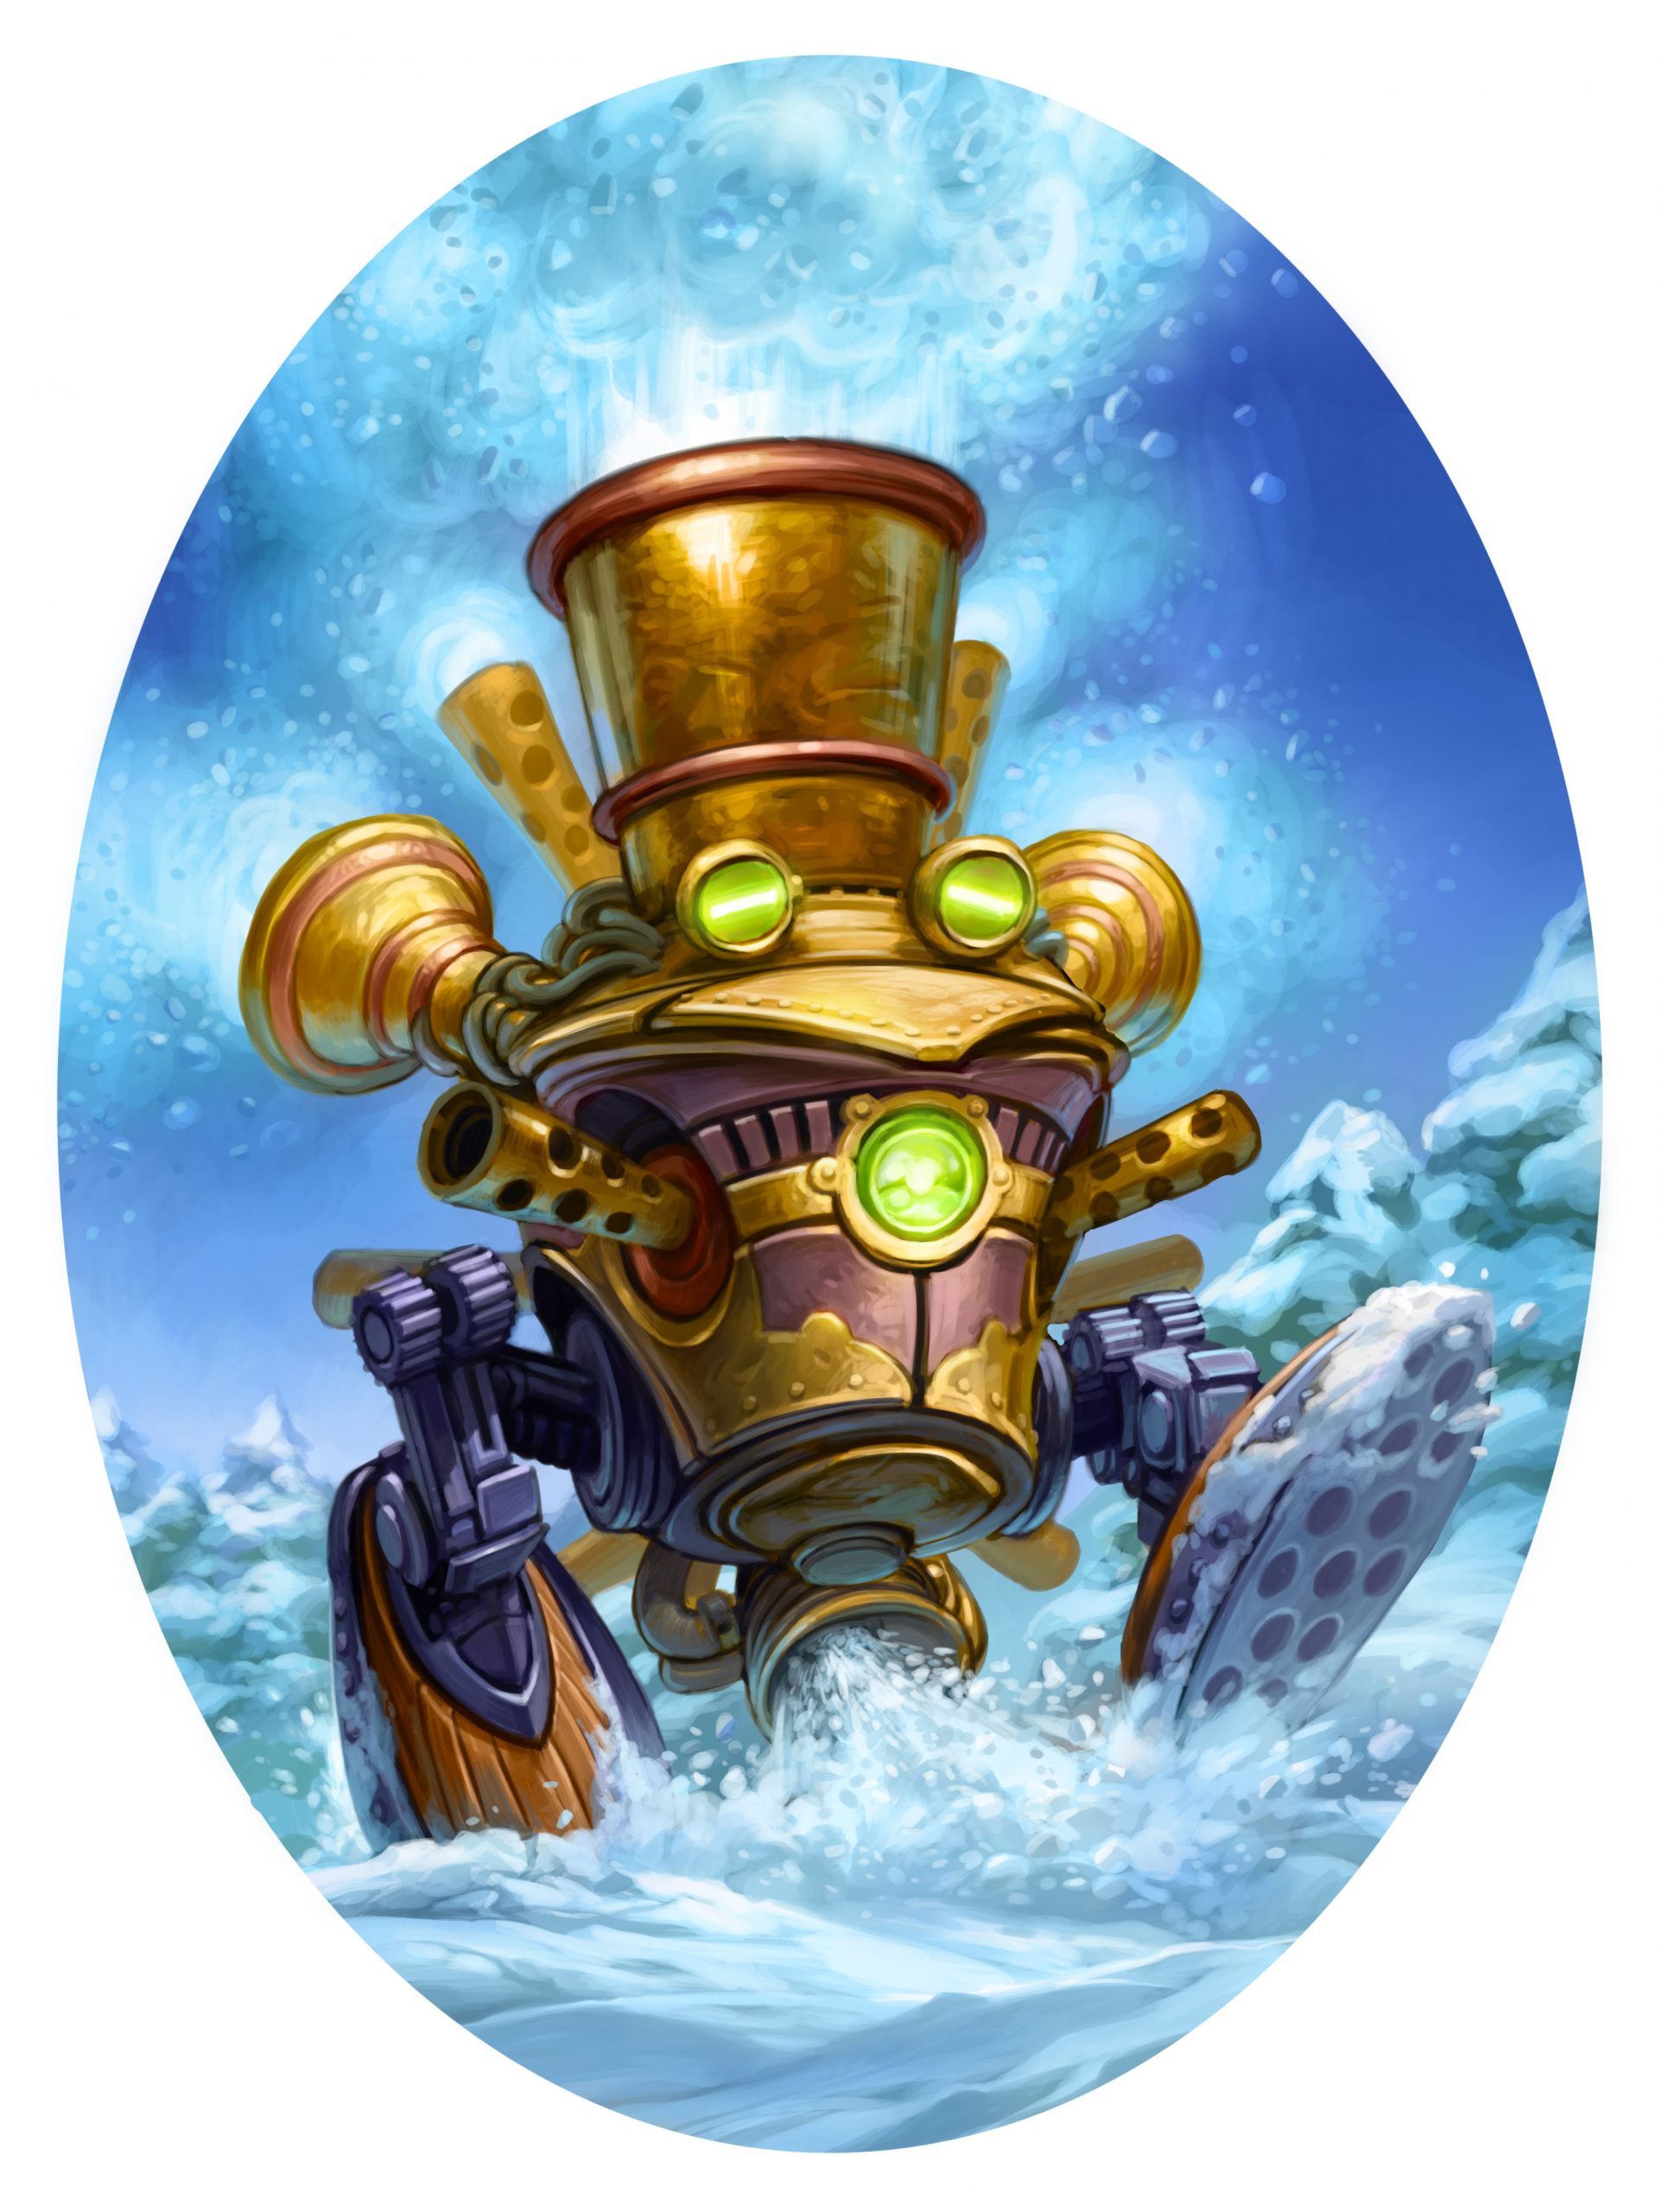 Card Illustration (Snow Chugger) - Hearthstone - © Blizzard Entertainment